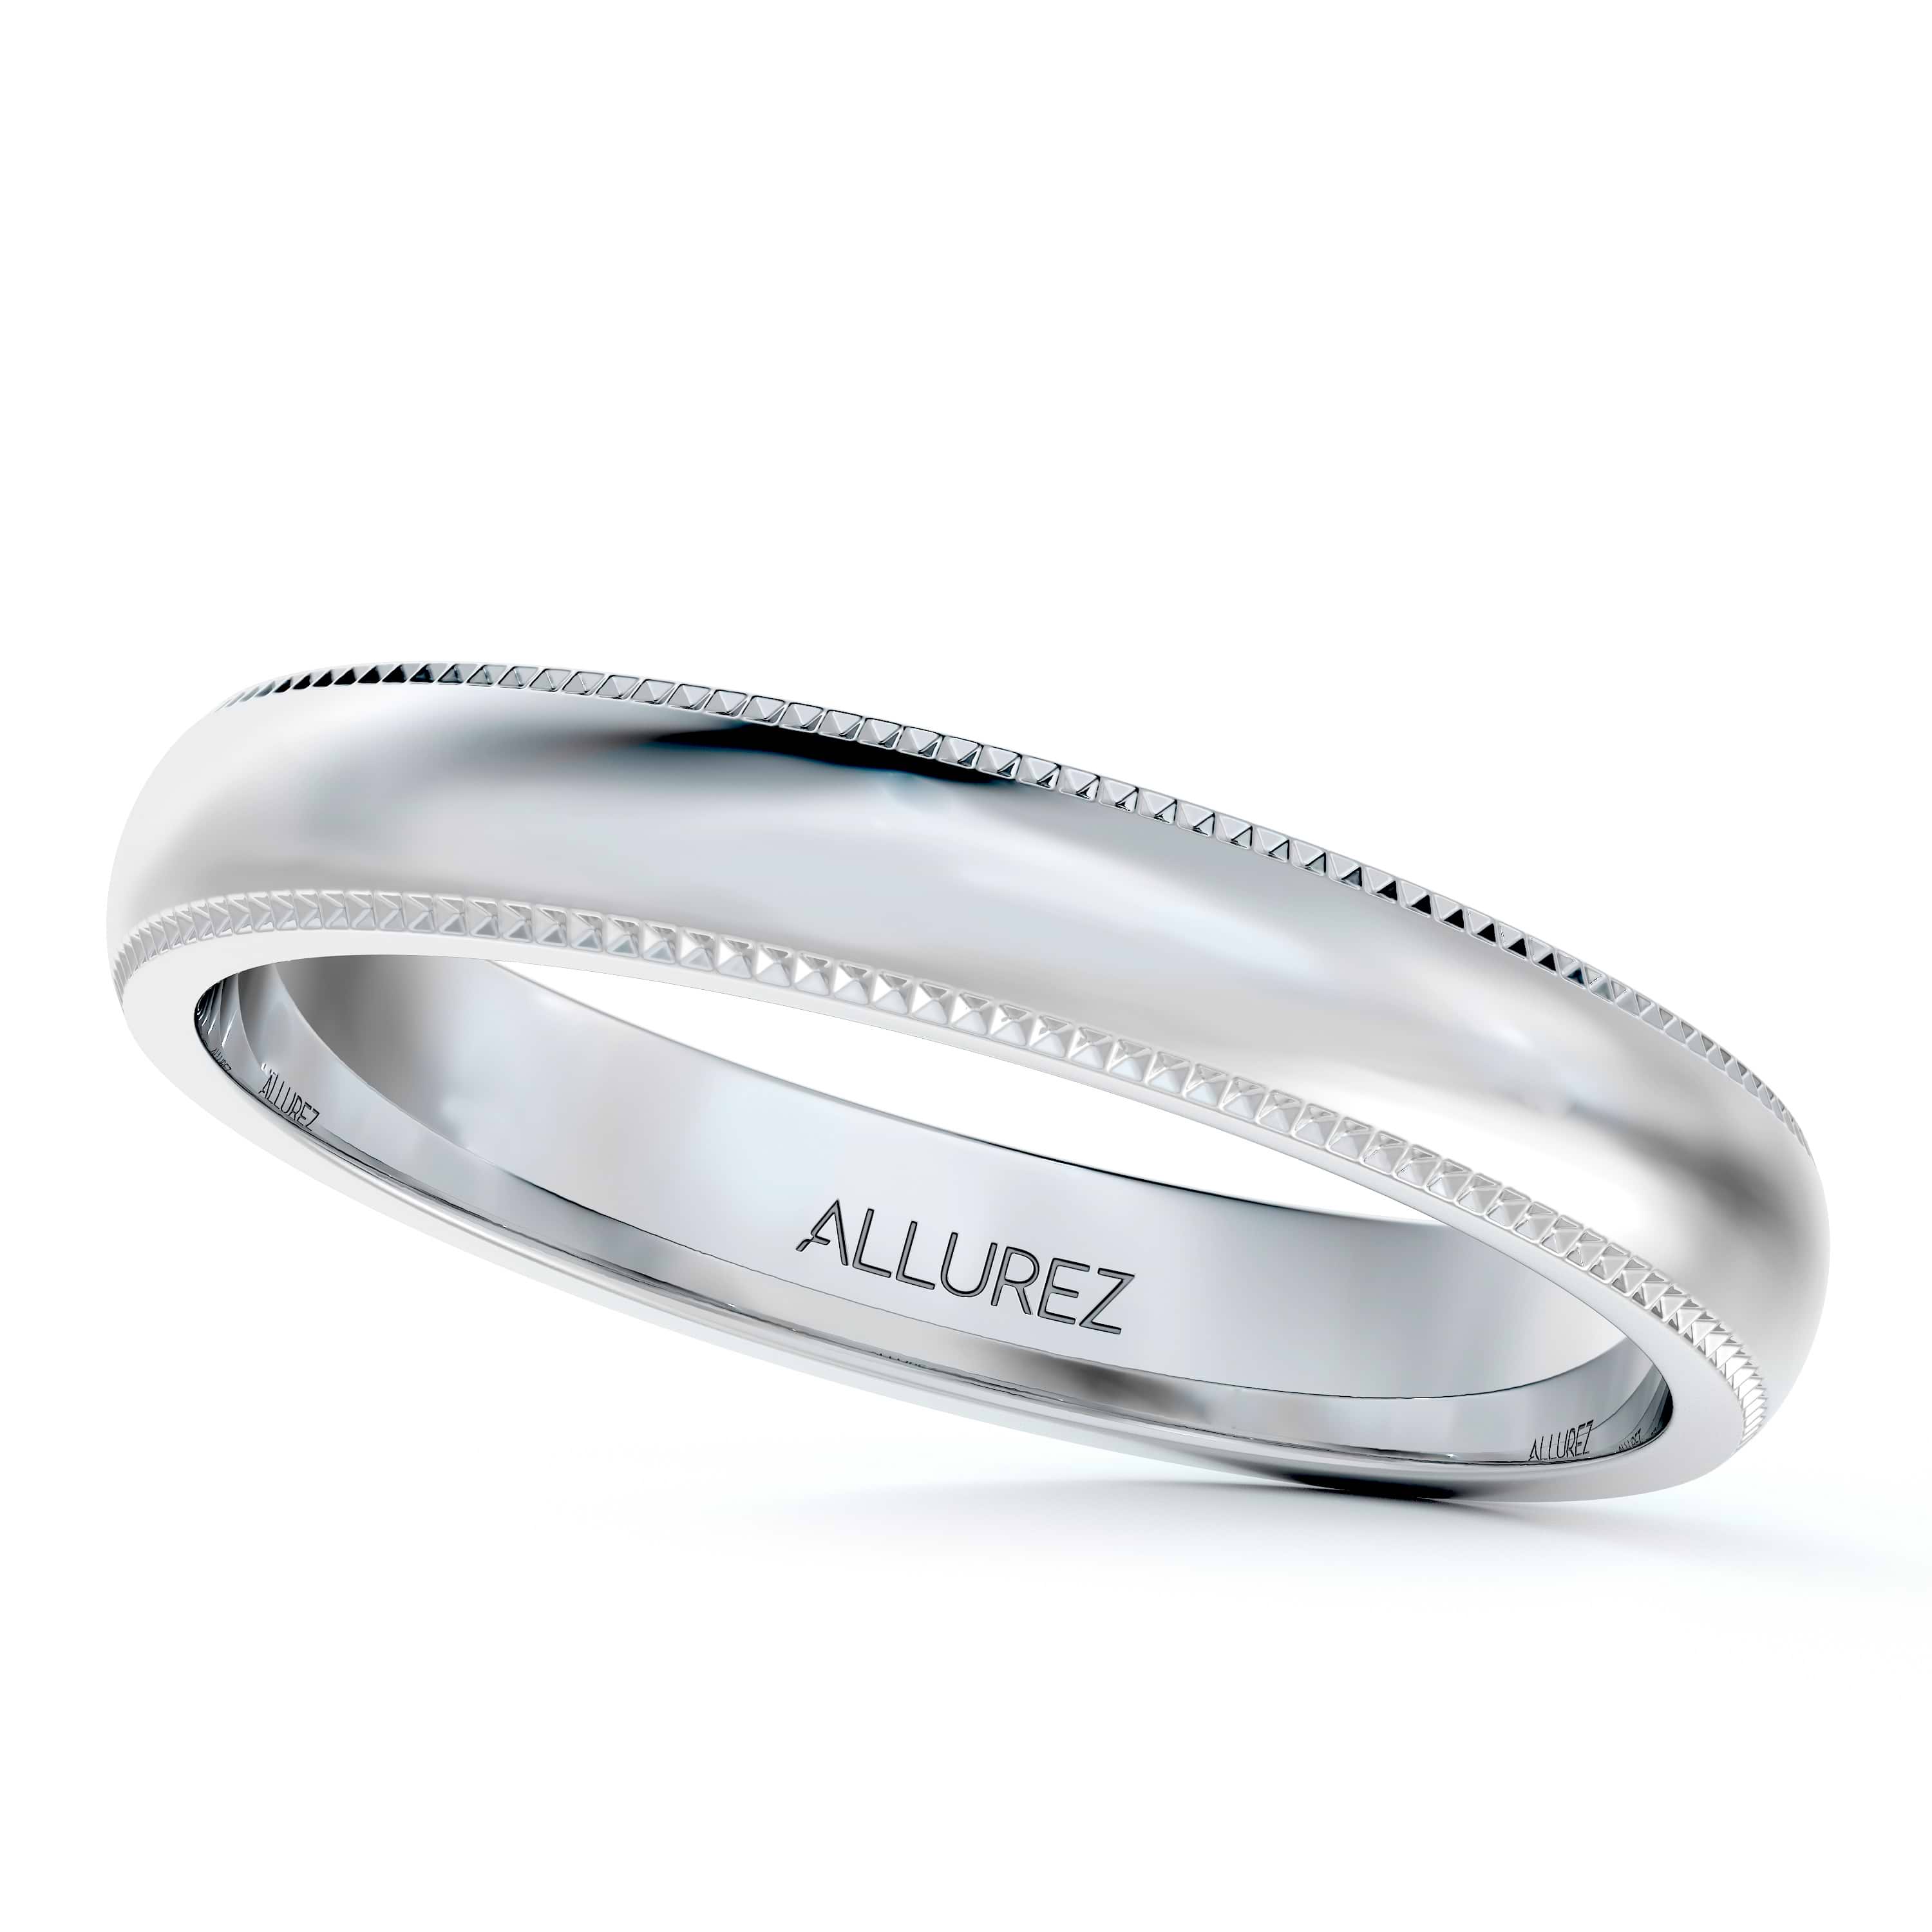 Milgrain Dome Comfort-Fit Thin Wedding Ring Band Platinum (3mm)